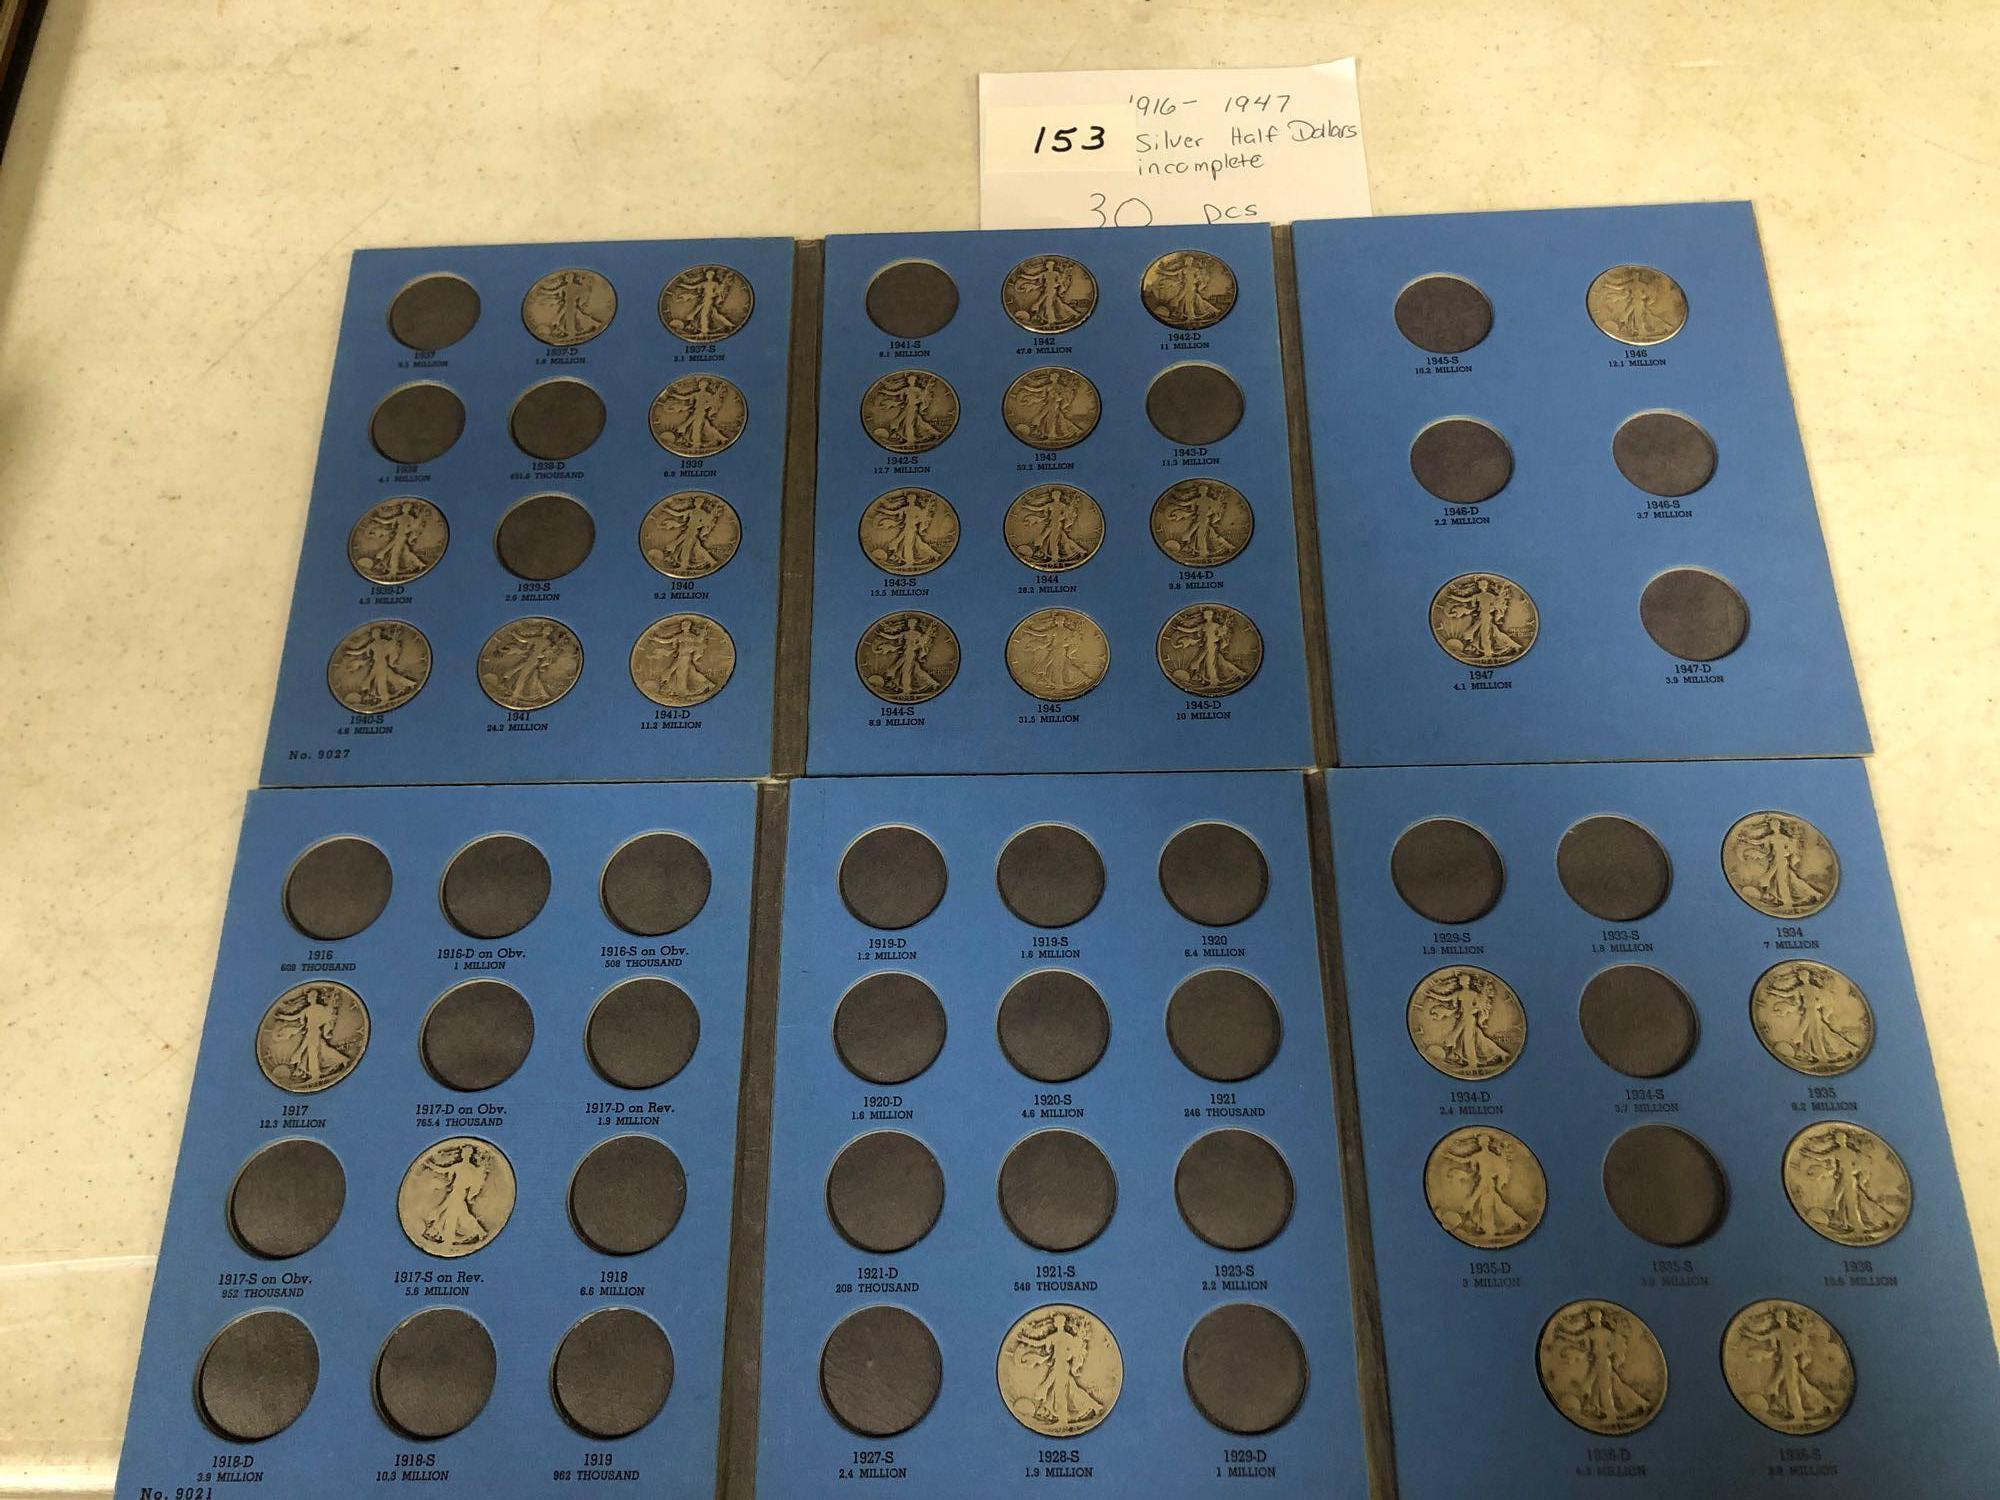 30 pcs. 1916-1947 silver half dollars - incomplete